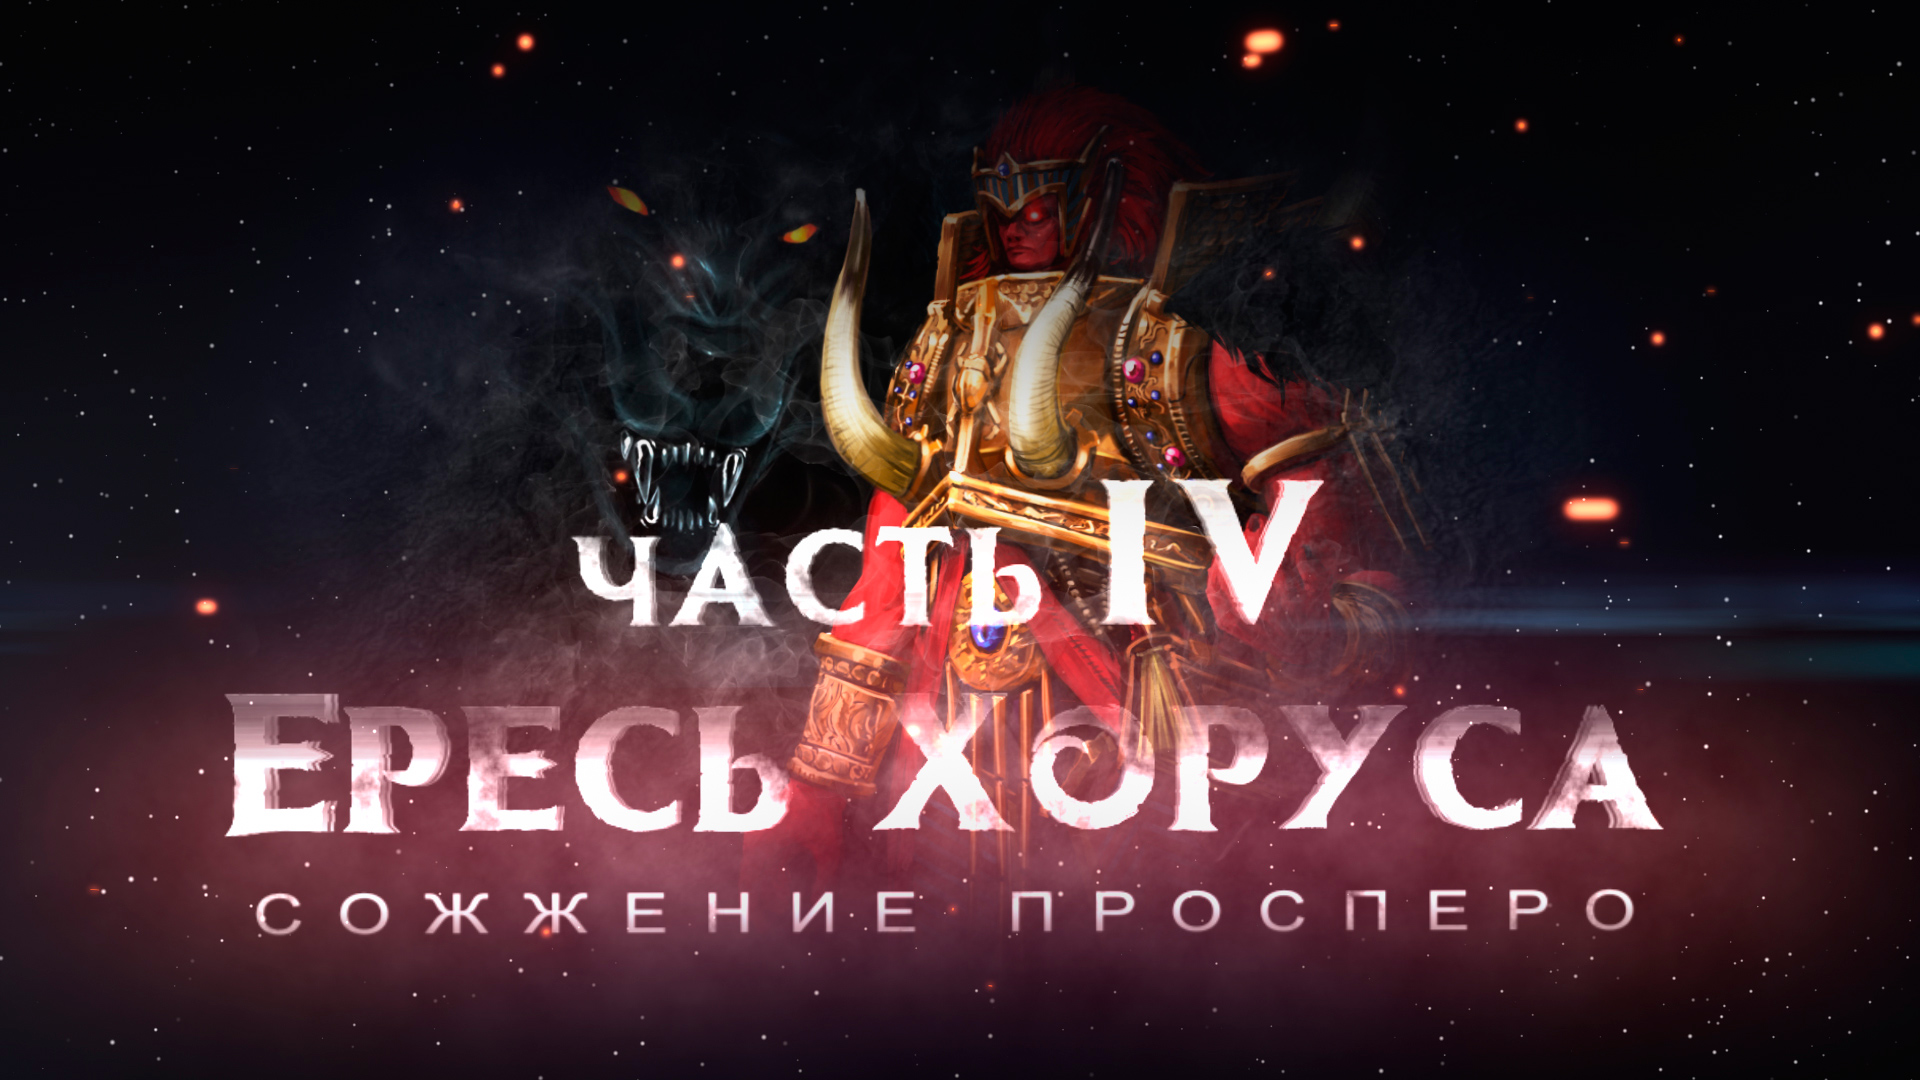 ЕРЕСЬ ХОРУСА.ч4 Motion фильм (Warhammer40k Horus Heresy).mp4